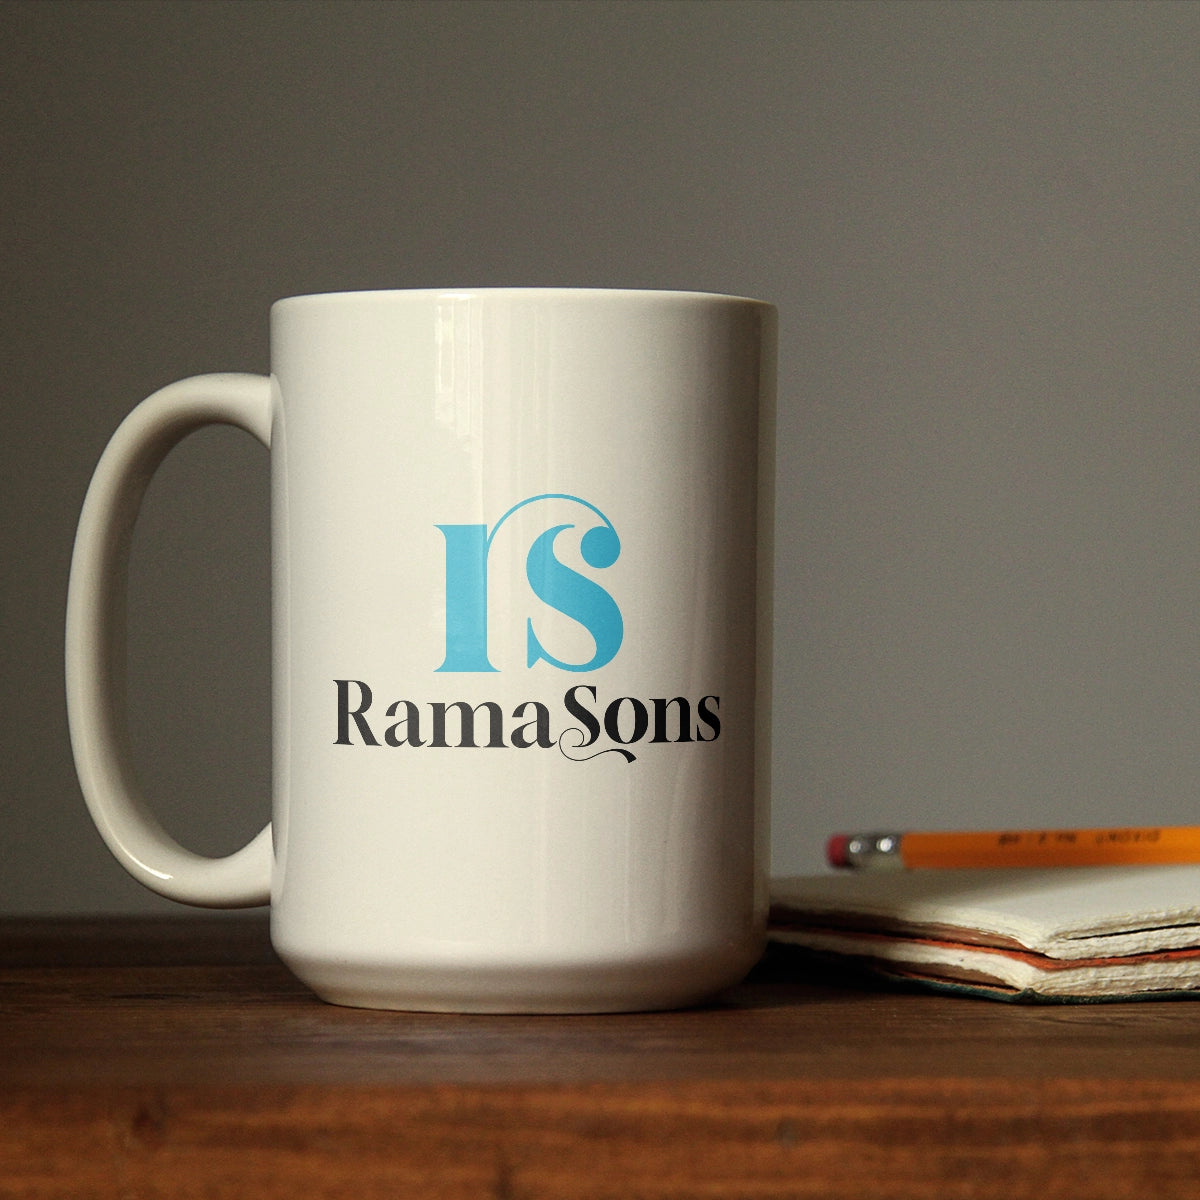 Ramasons.com